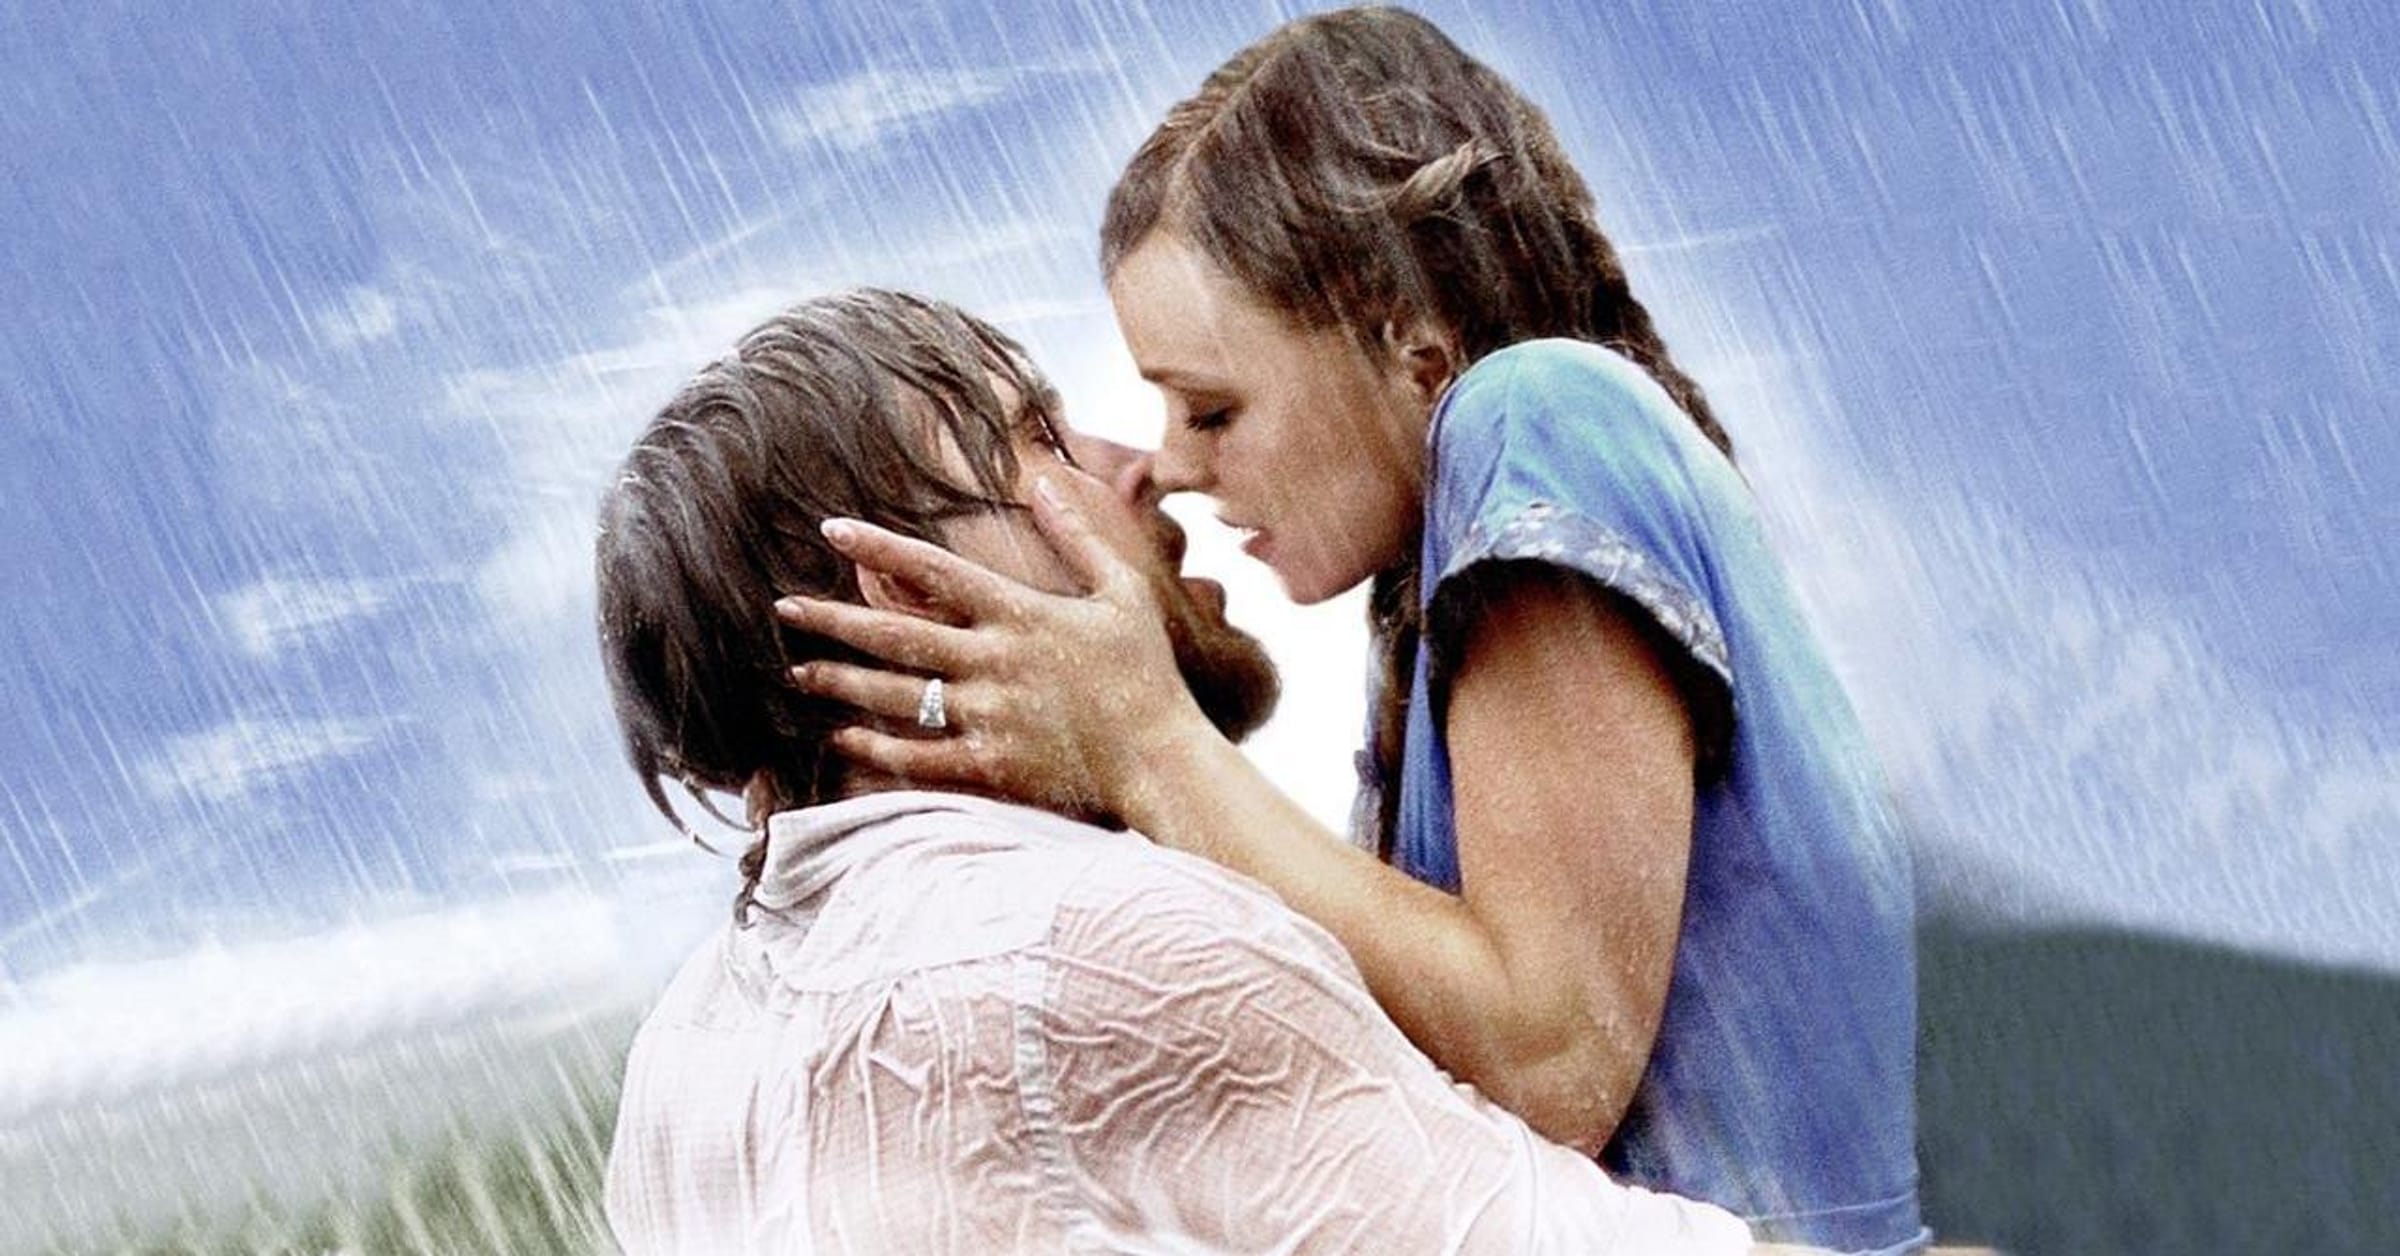 romantic couple in rain